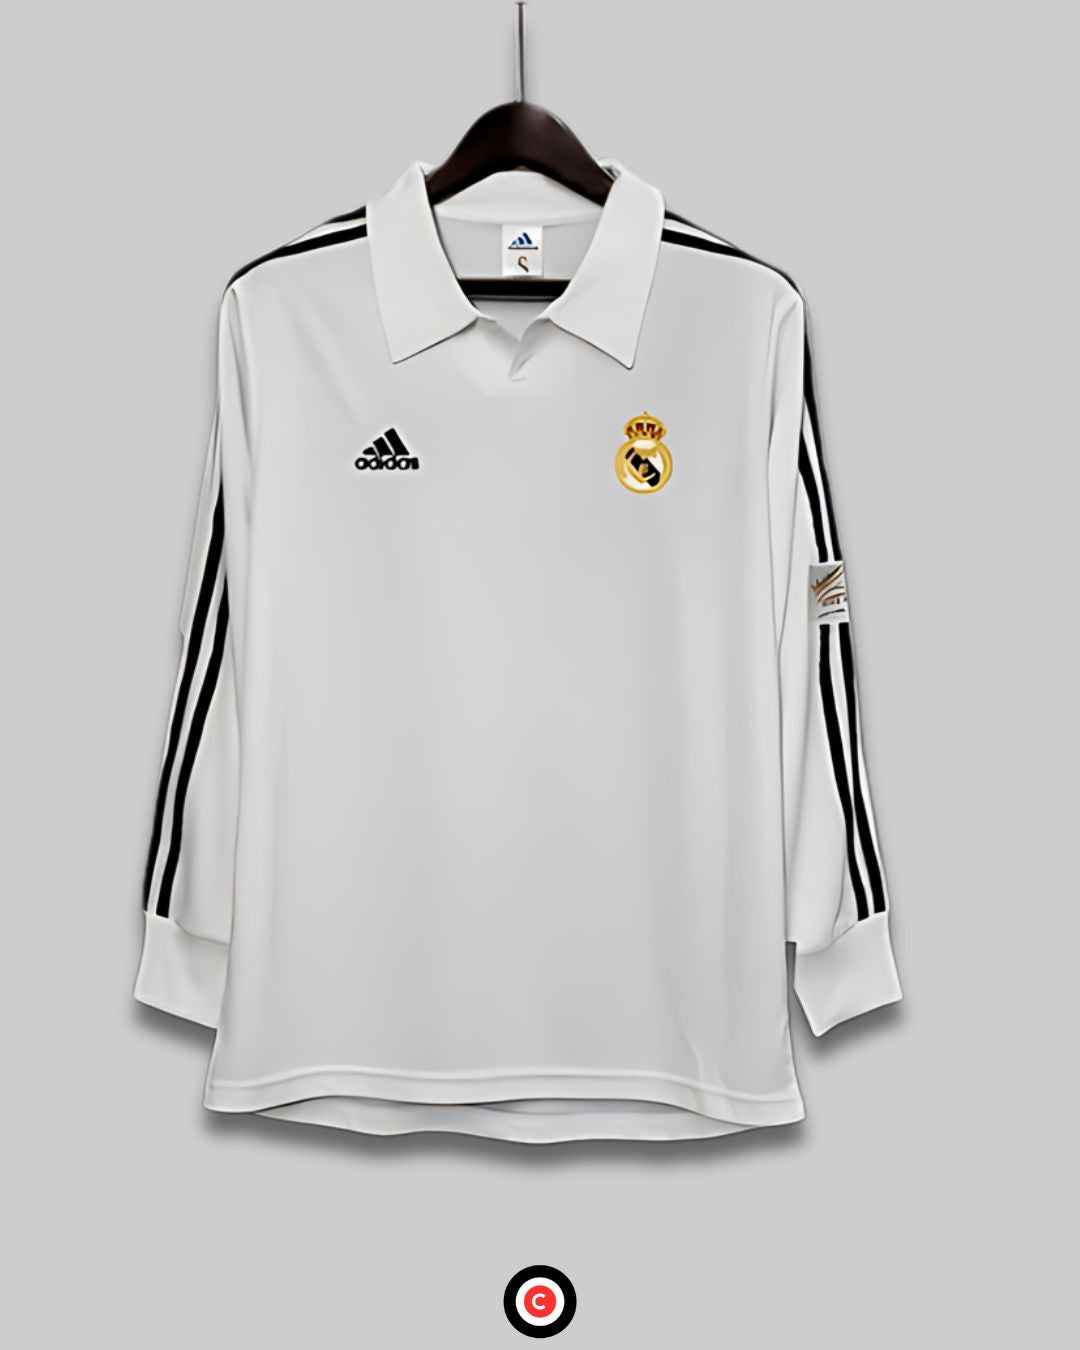 Real Madrid 2001/02 (Home Kit) - Premium  from CatenaccioDesigns - Just €60.99! Shop now at CatenaccioDesigns